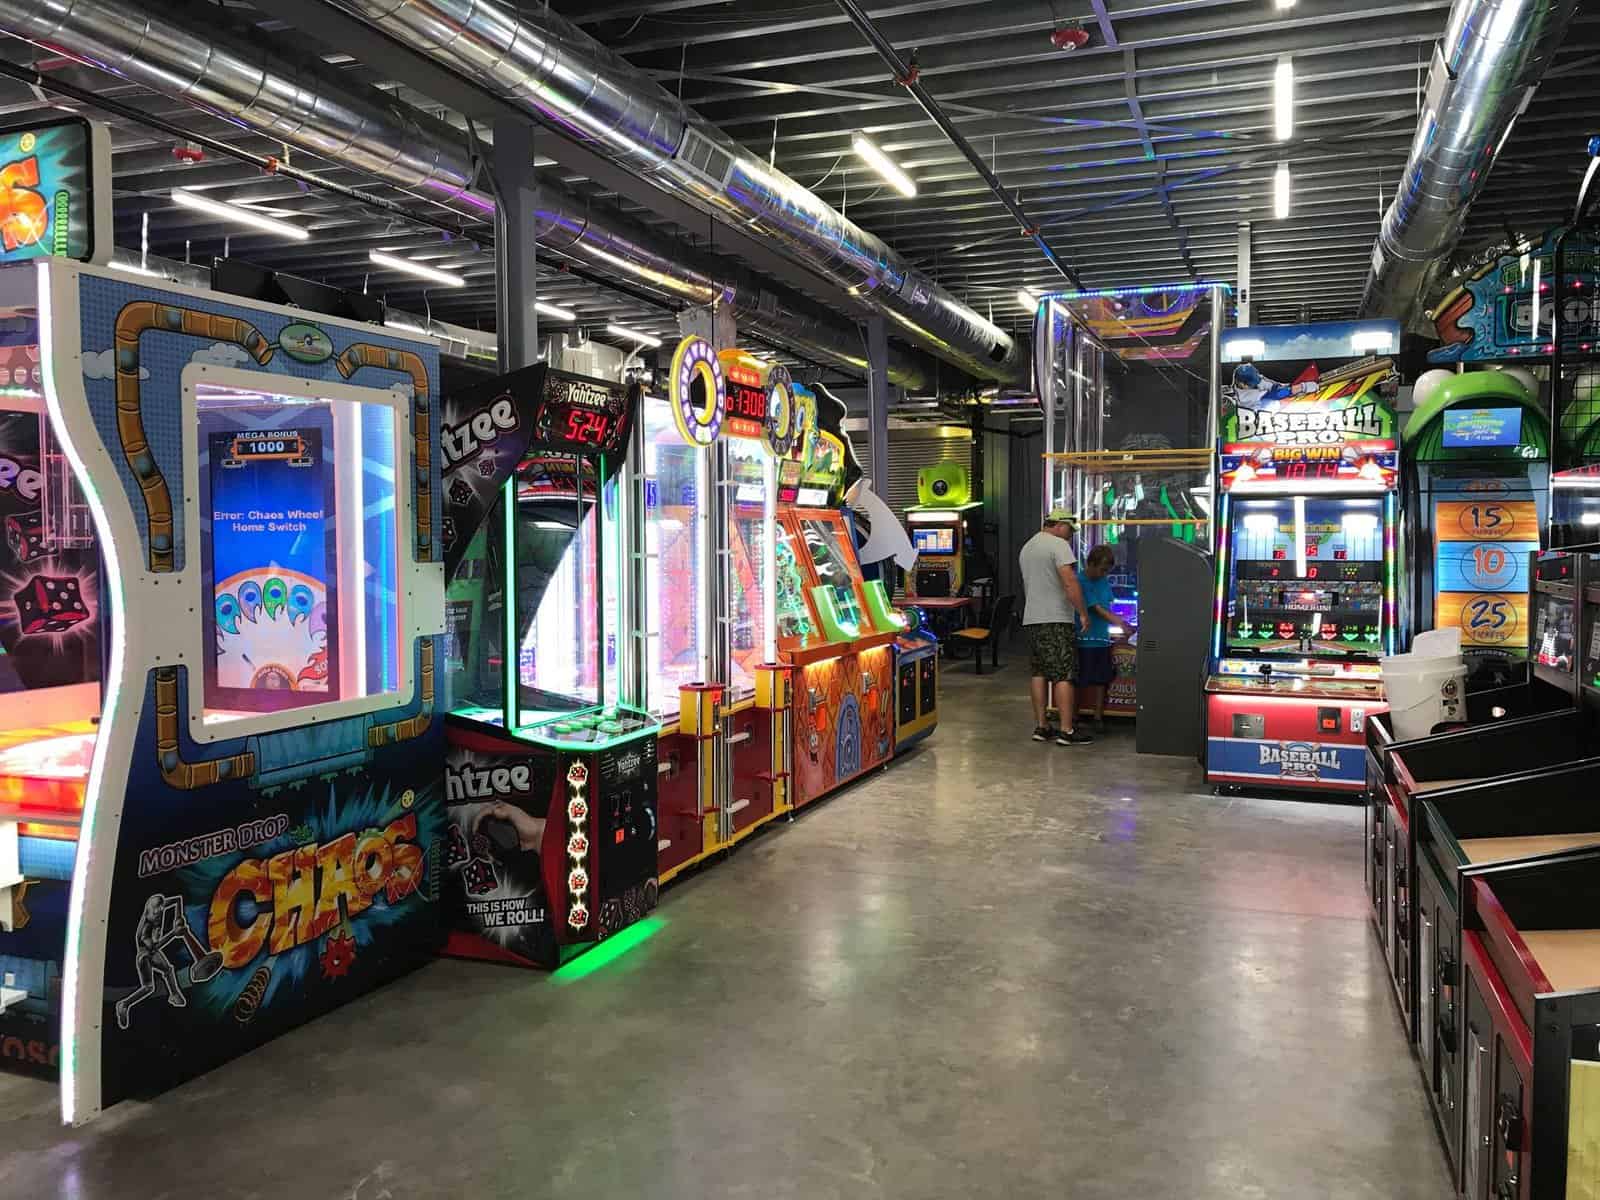 The Carolina Beach arcade is open to families on the Carolina Beach Boardwalk